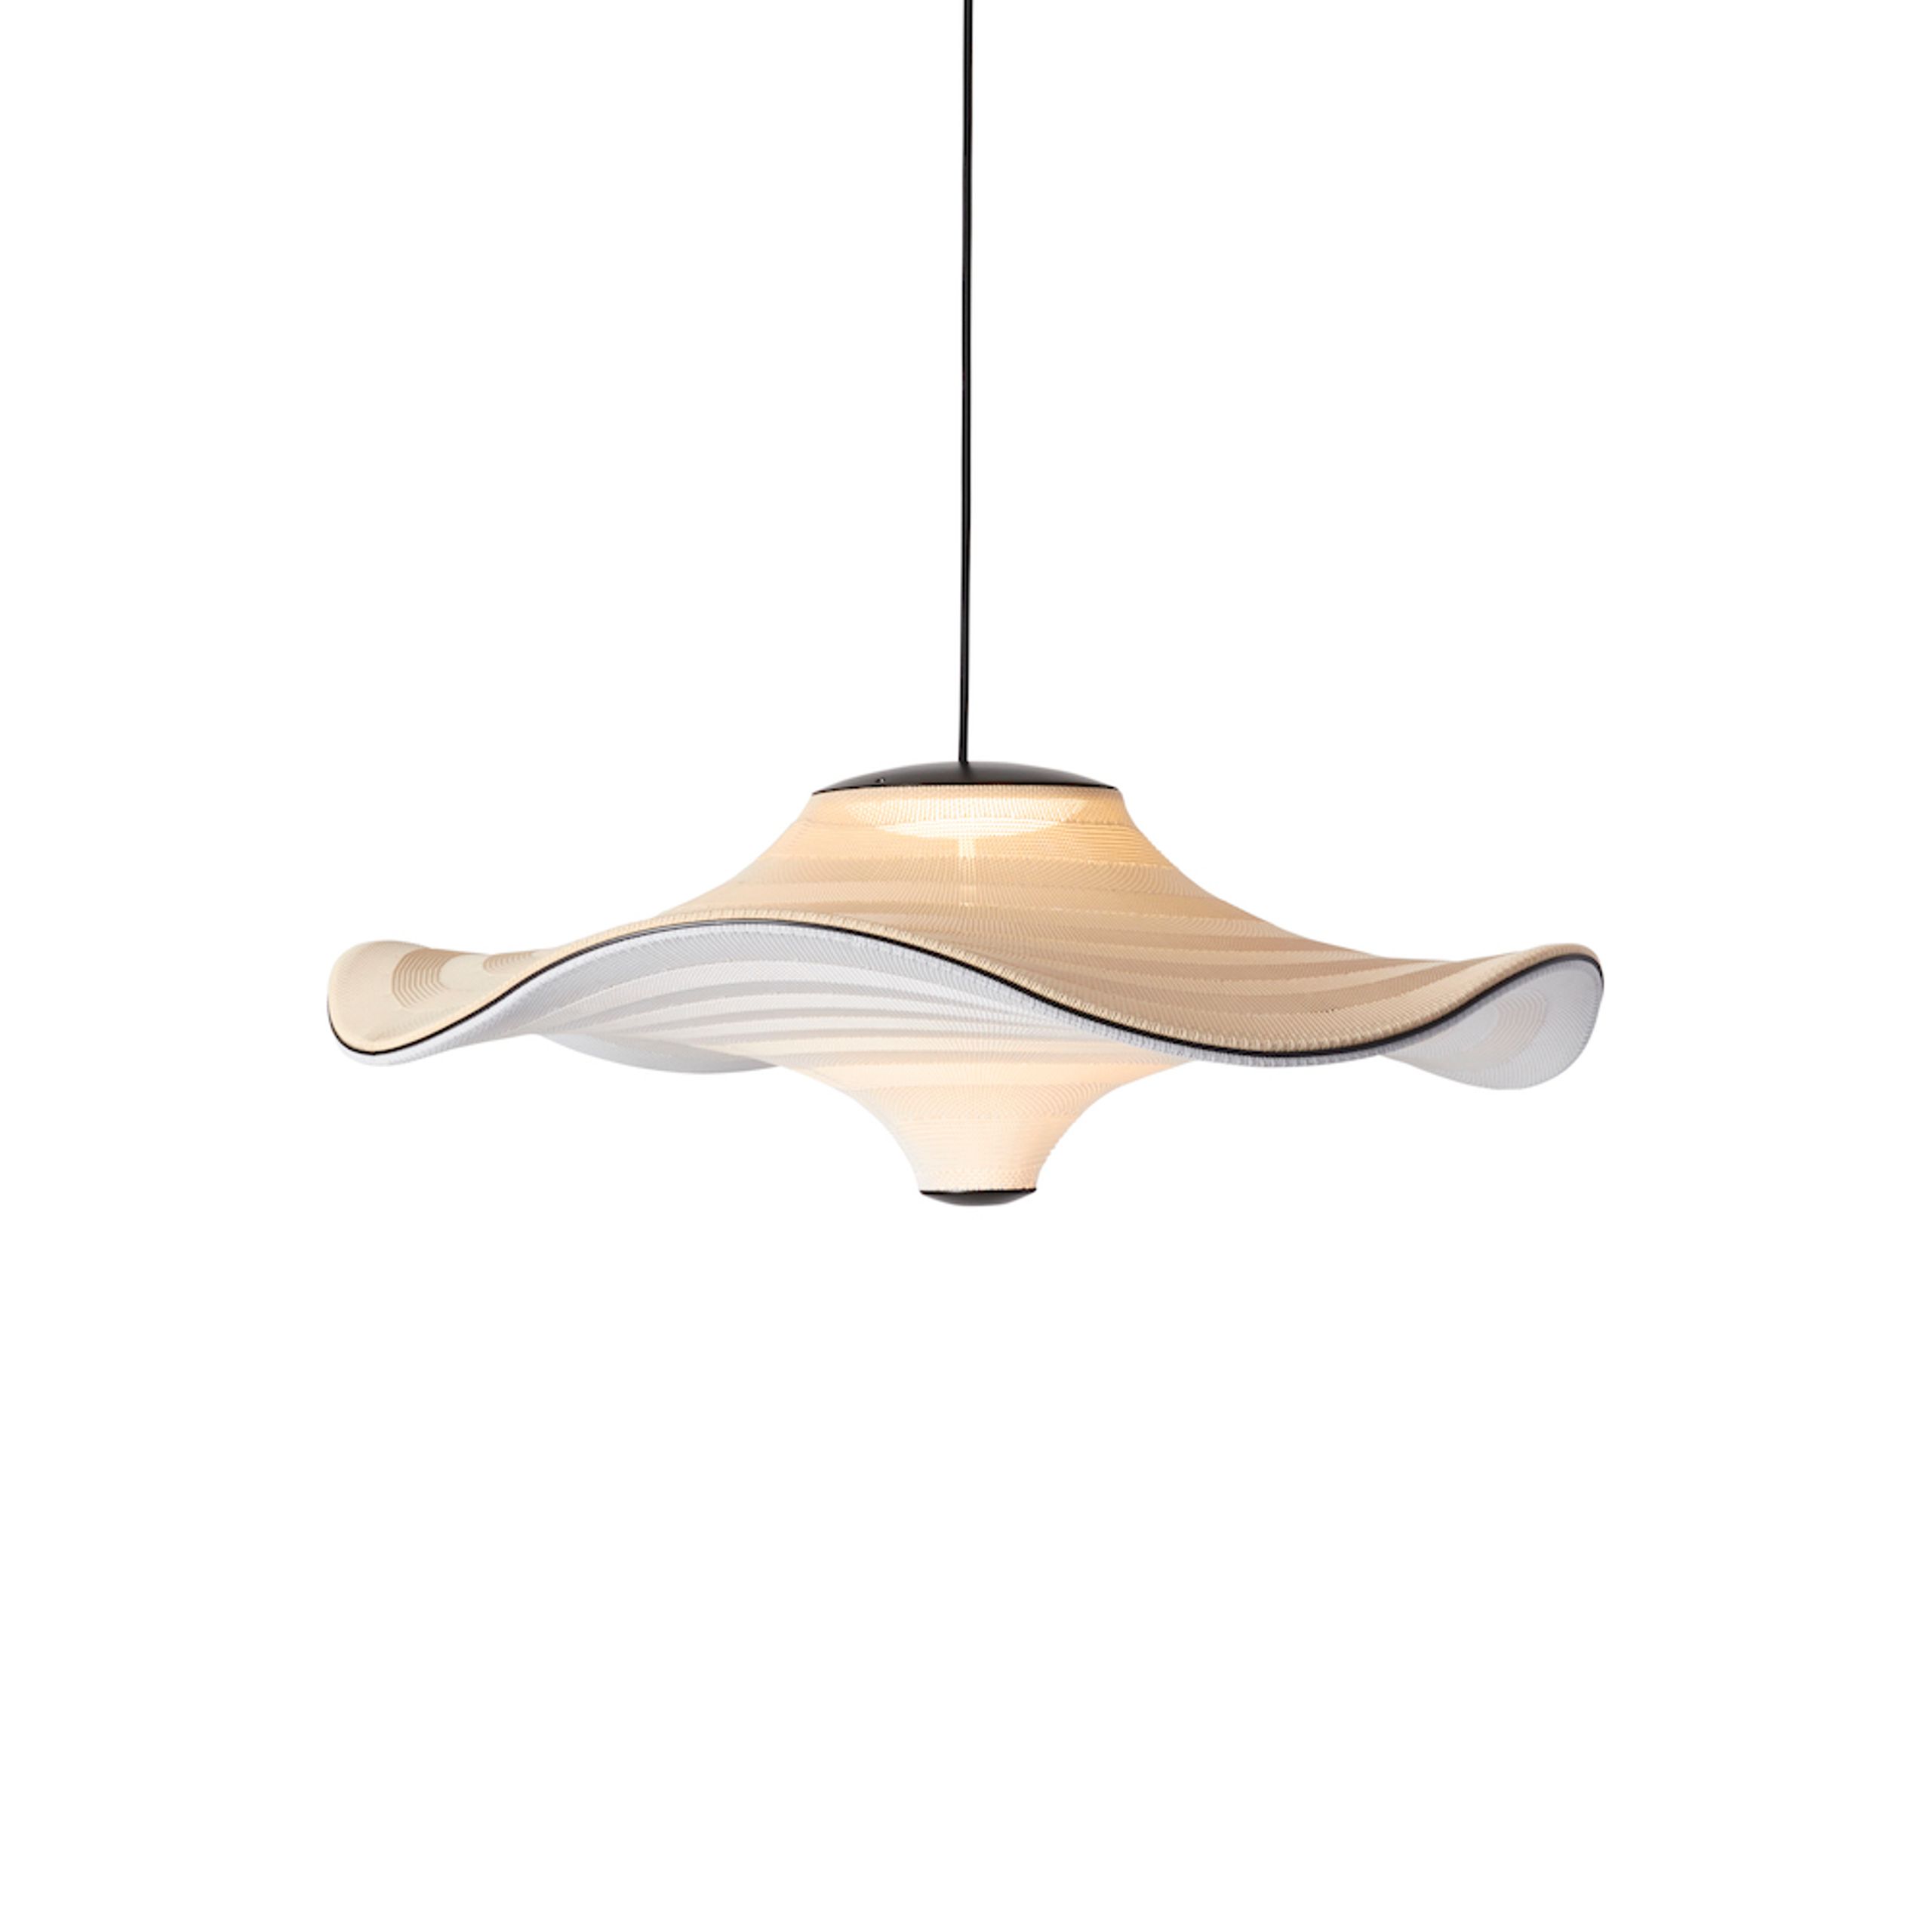 Made by Hand - Pendulum - Flying lamp Ø96 - Golden Sand